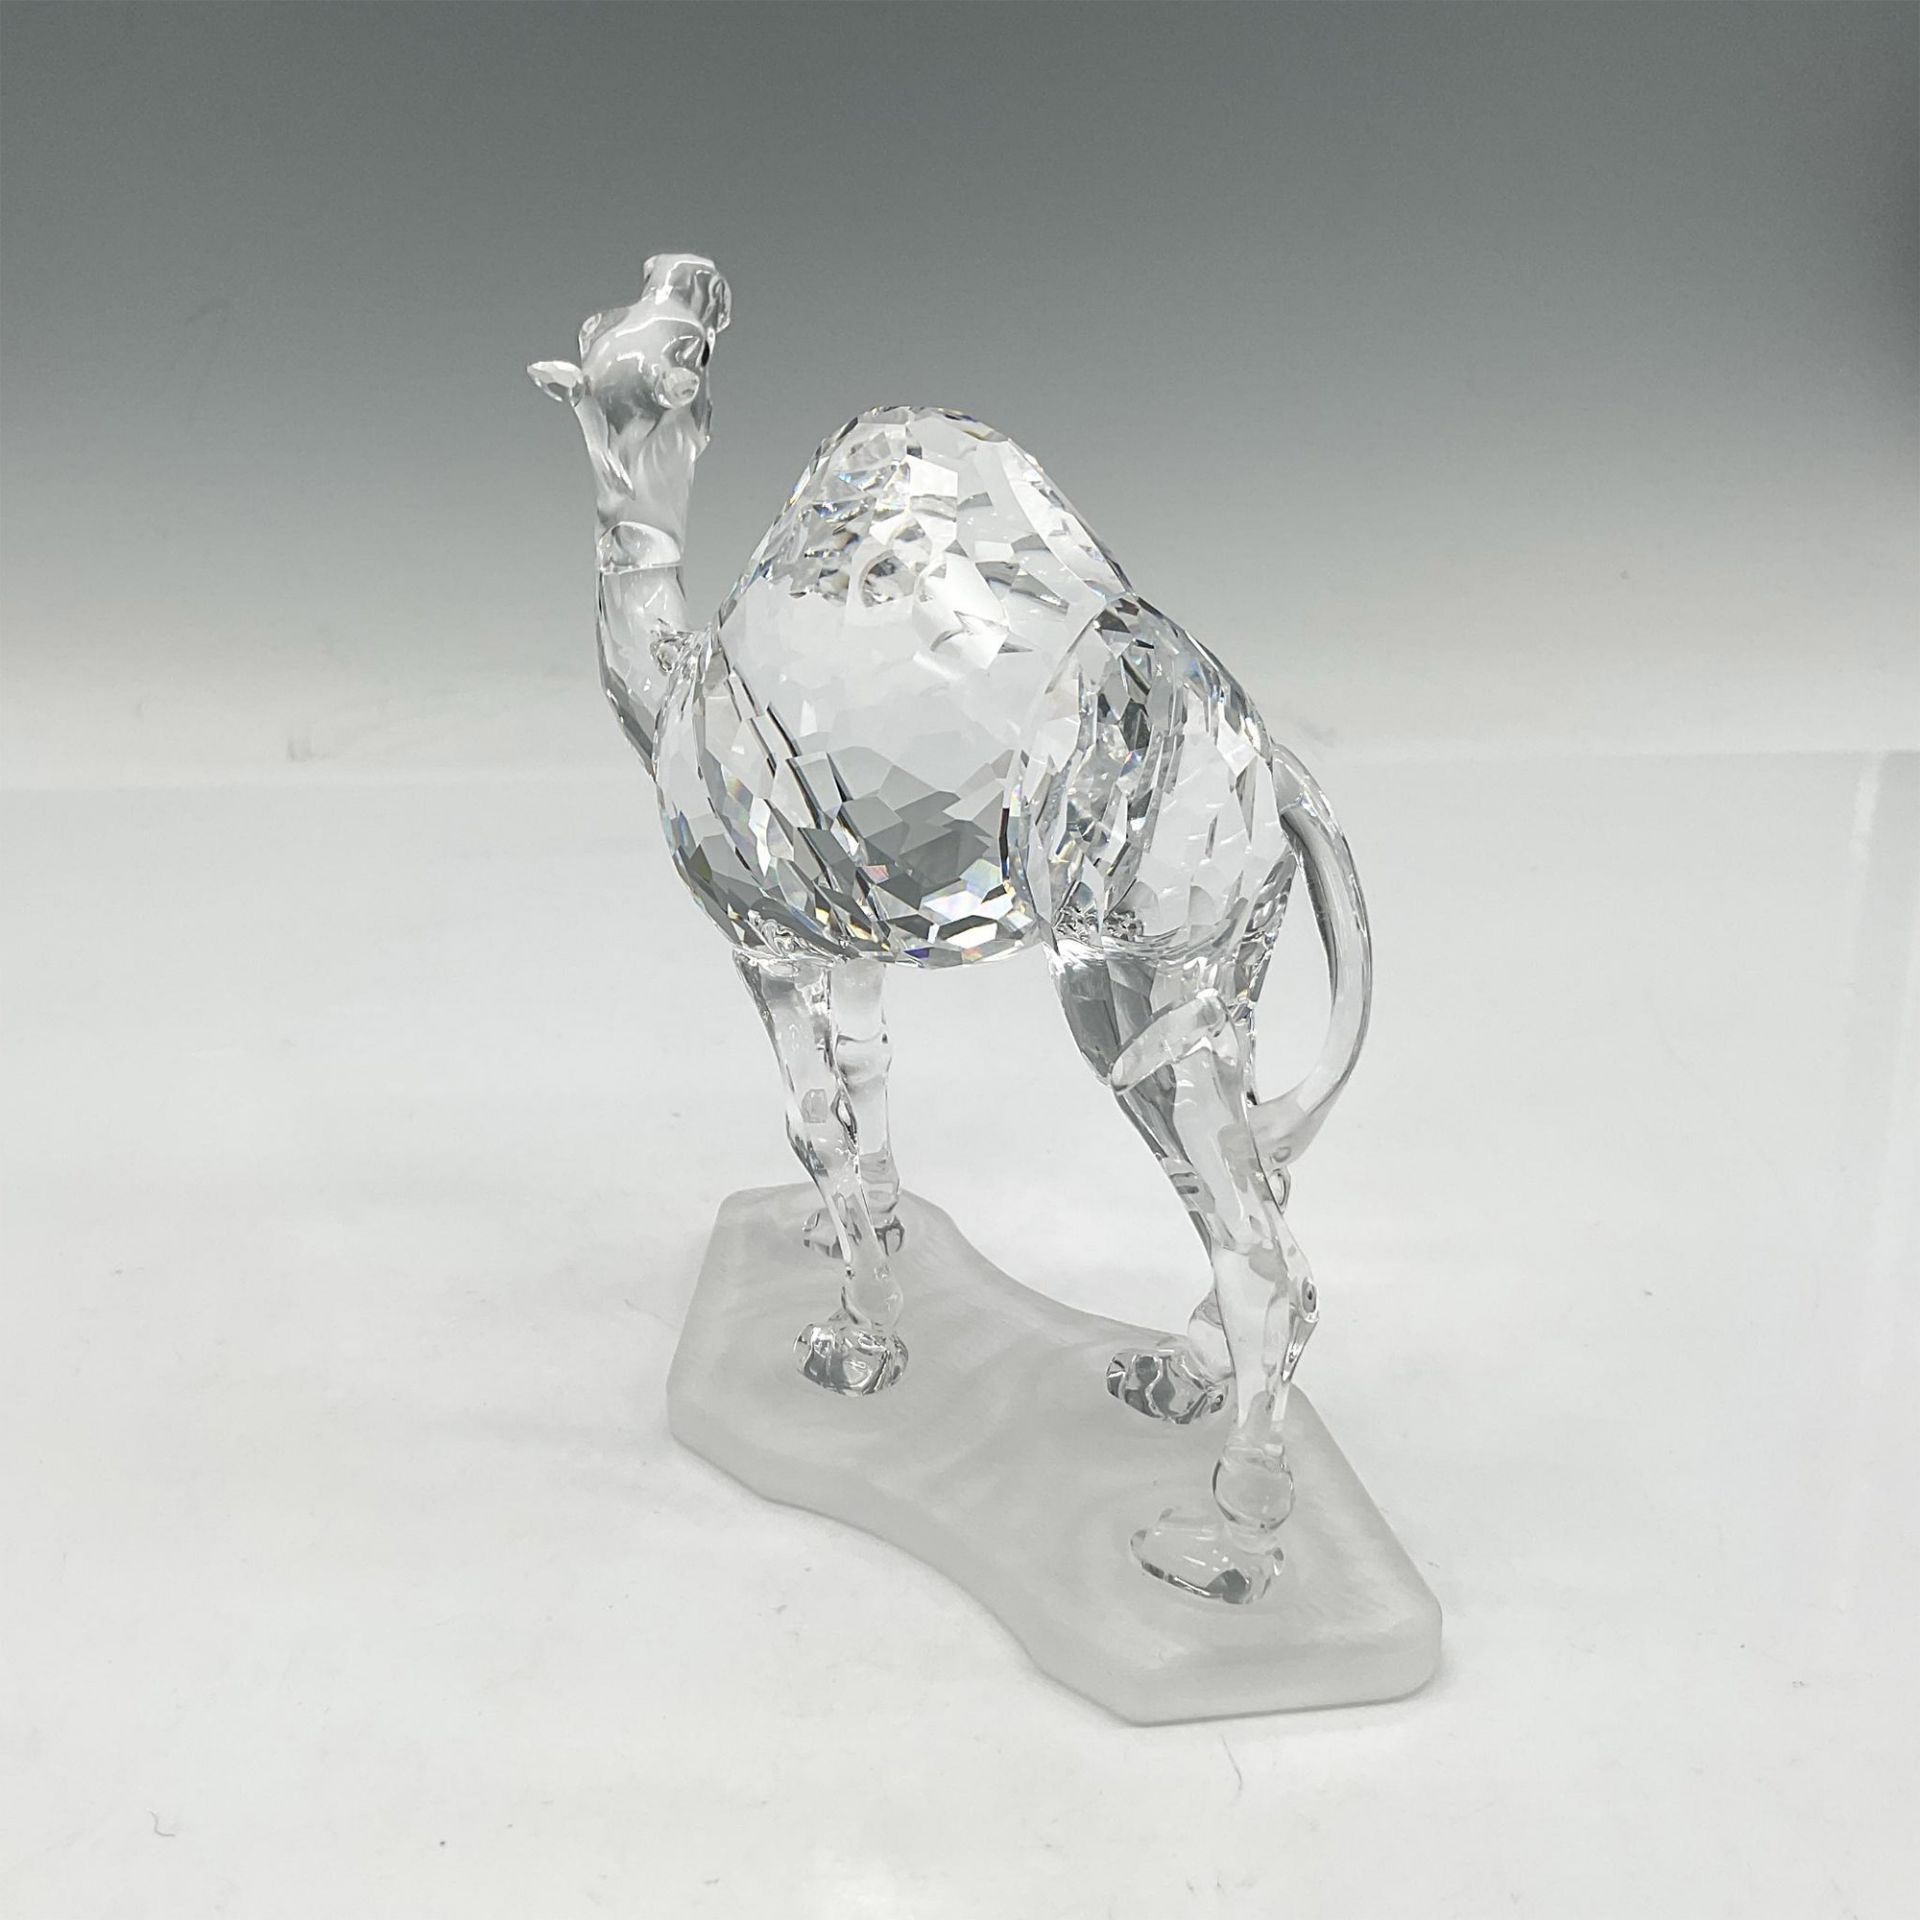 Swarovski Crystal Figurine, Camel - Image 2 of 3